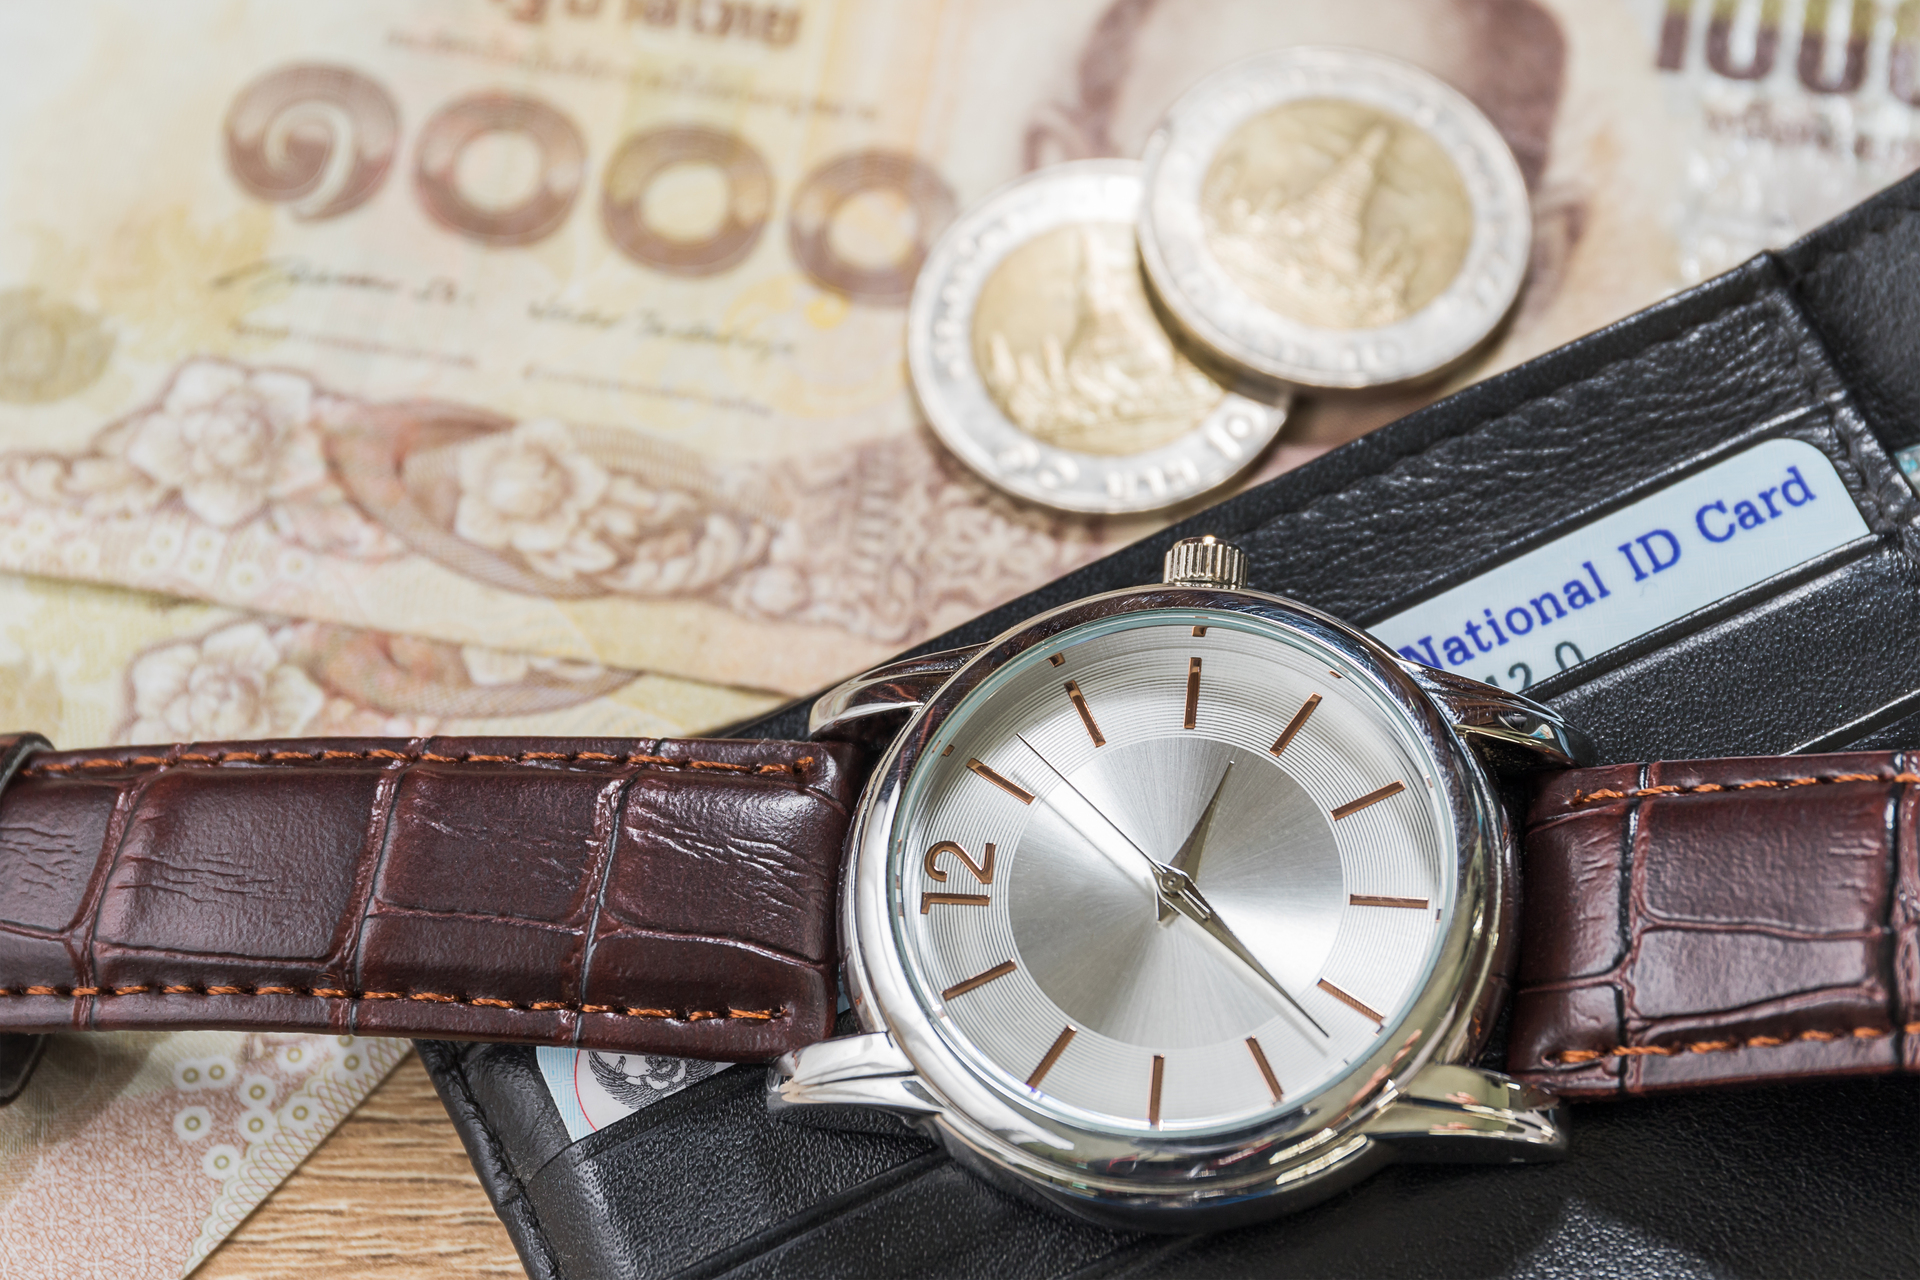 Zegarek na pasku, monety i banknoty leżące na stole